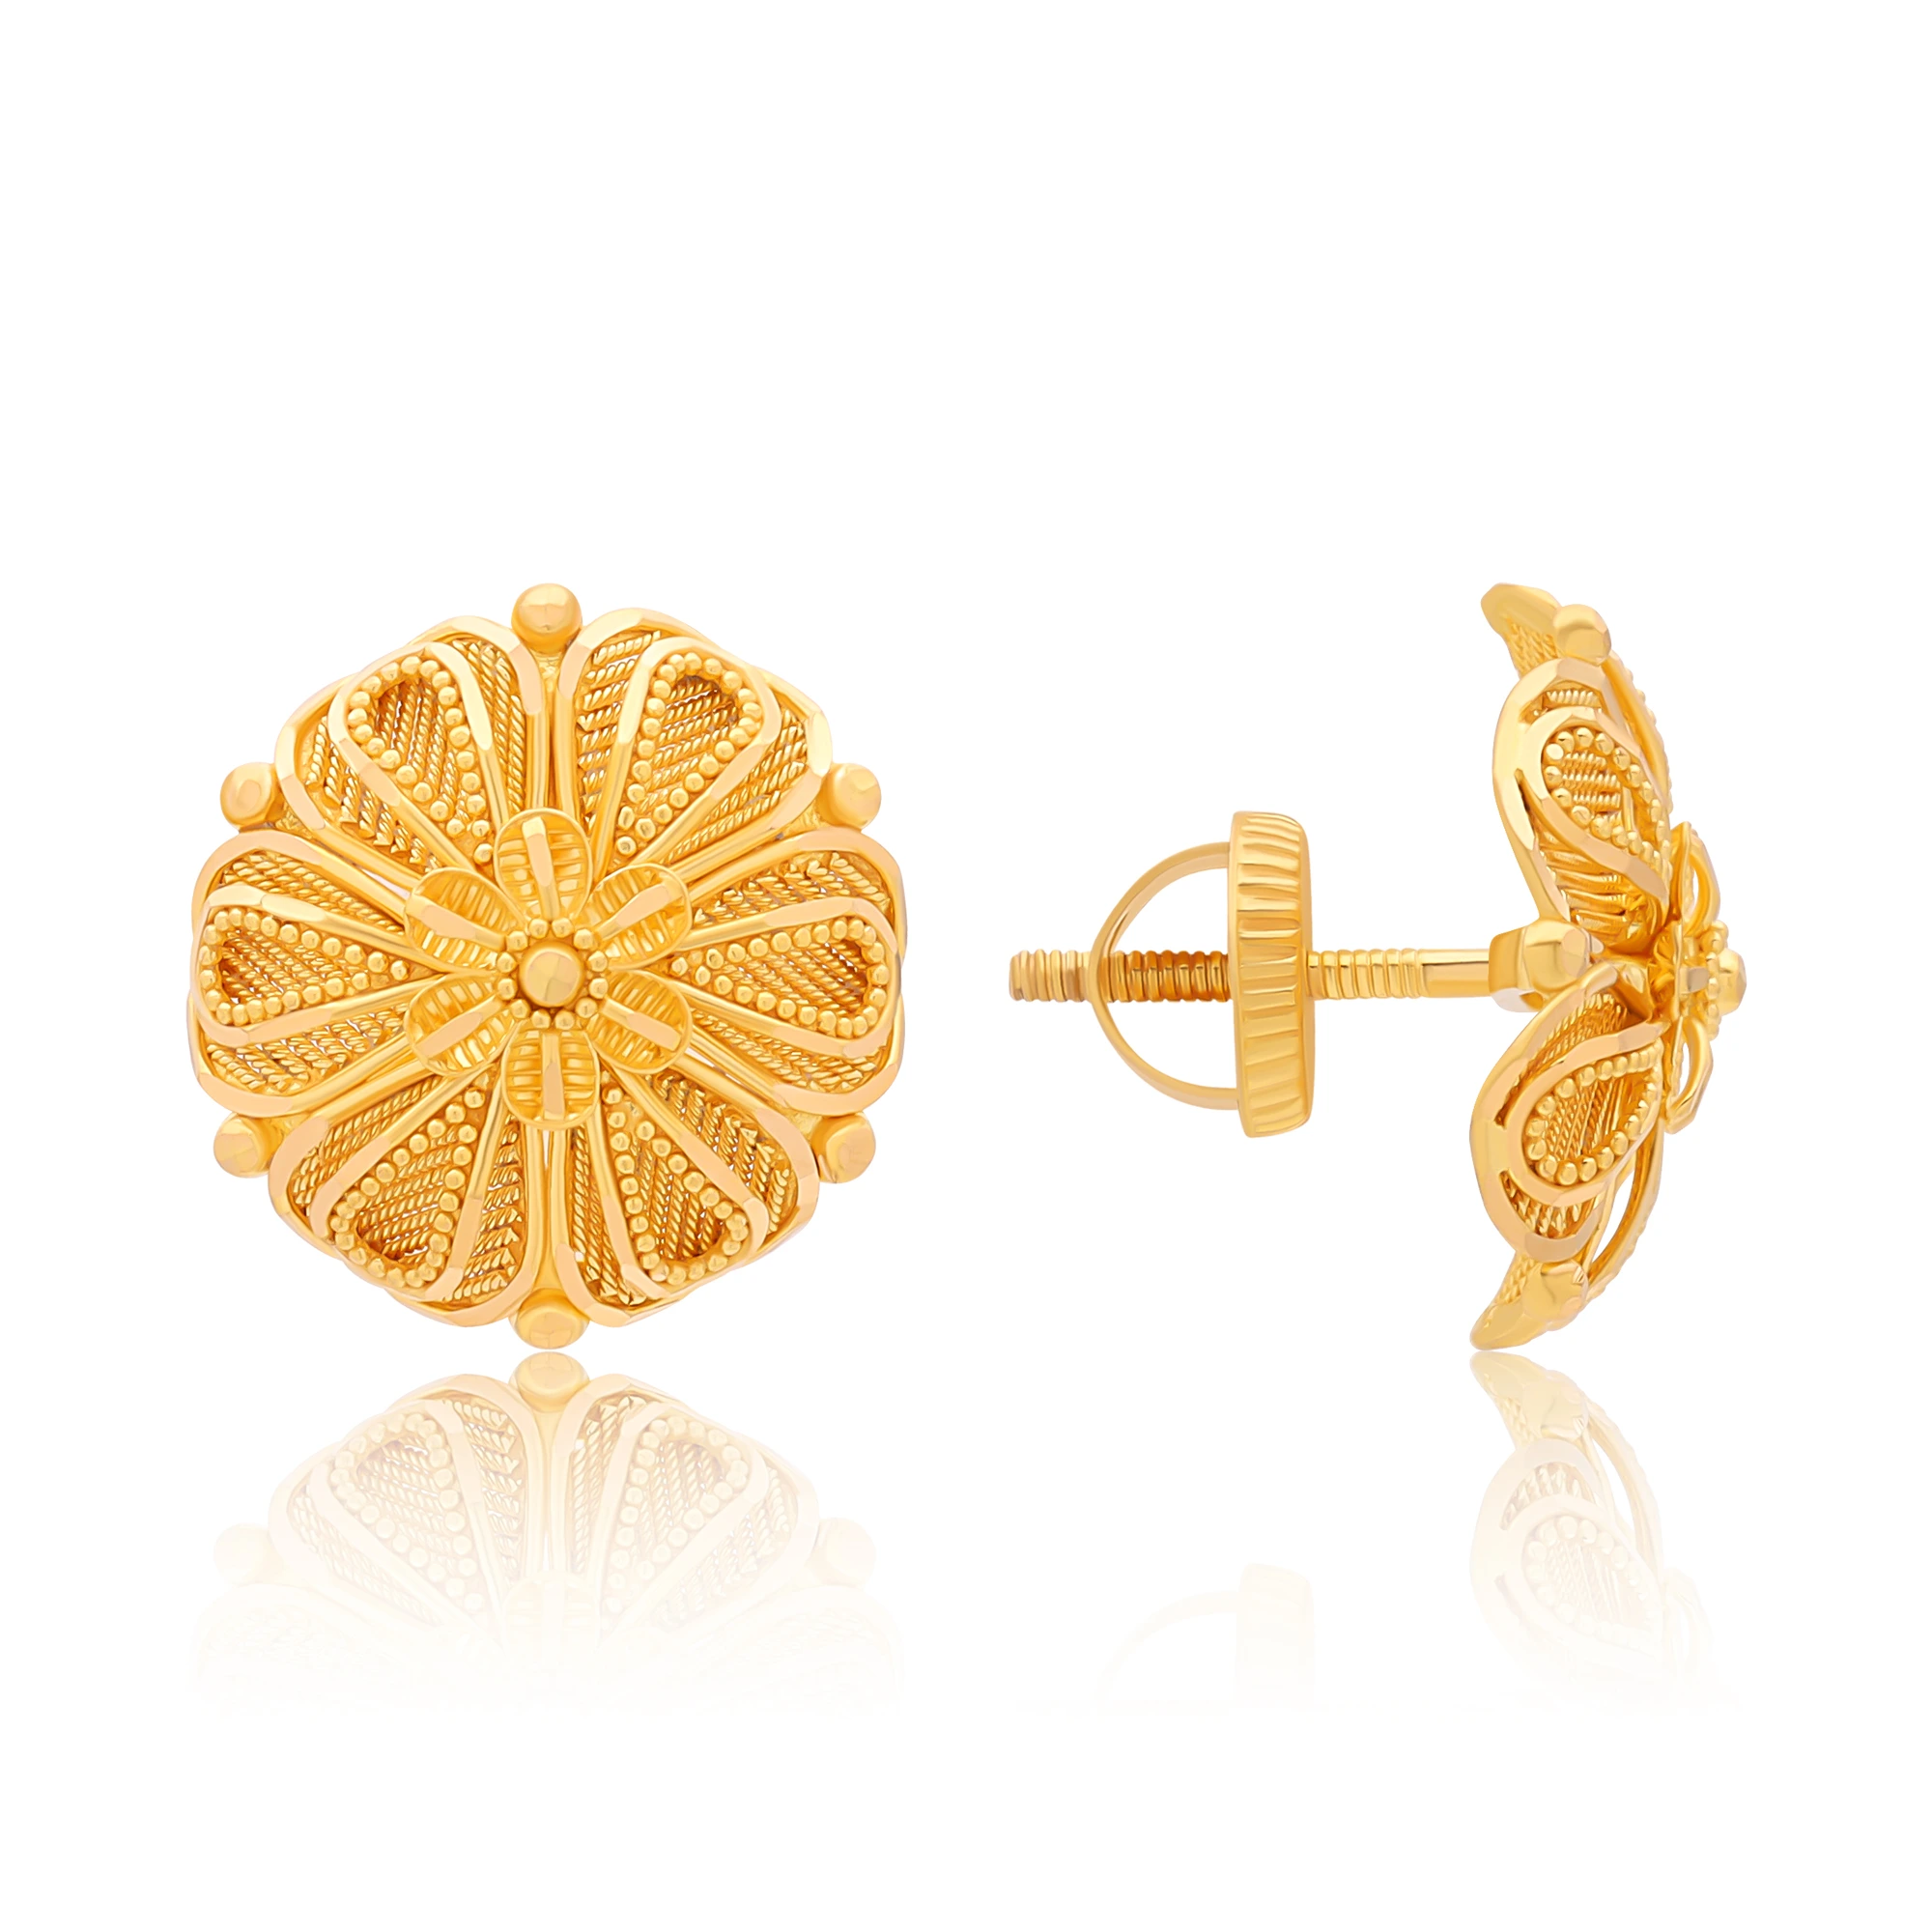 Vikas Chain & Jewellery Pvt. Ltd. | Gold earrings wedding, Delicate gold  jewelry, Gold wedding jewelry necklace